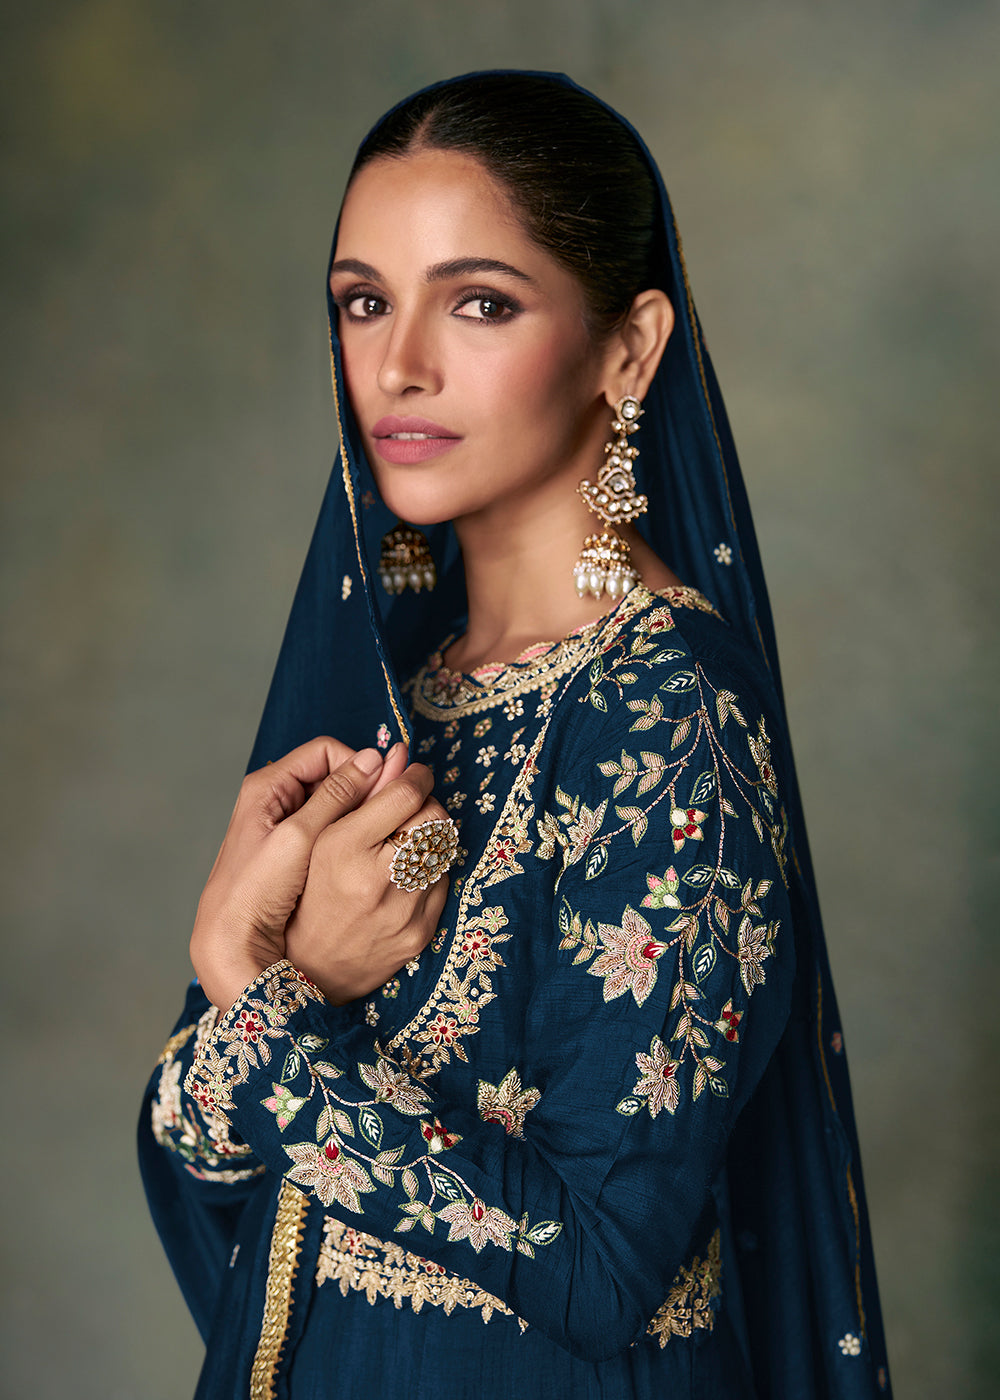 Buy Now Sangeet Wear Blue Premium Silk Indian Anarkali Gown Online in USA, UK, Australia, Canada & Worldwide at Empress Clothing.